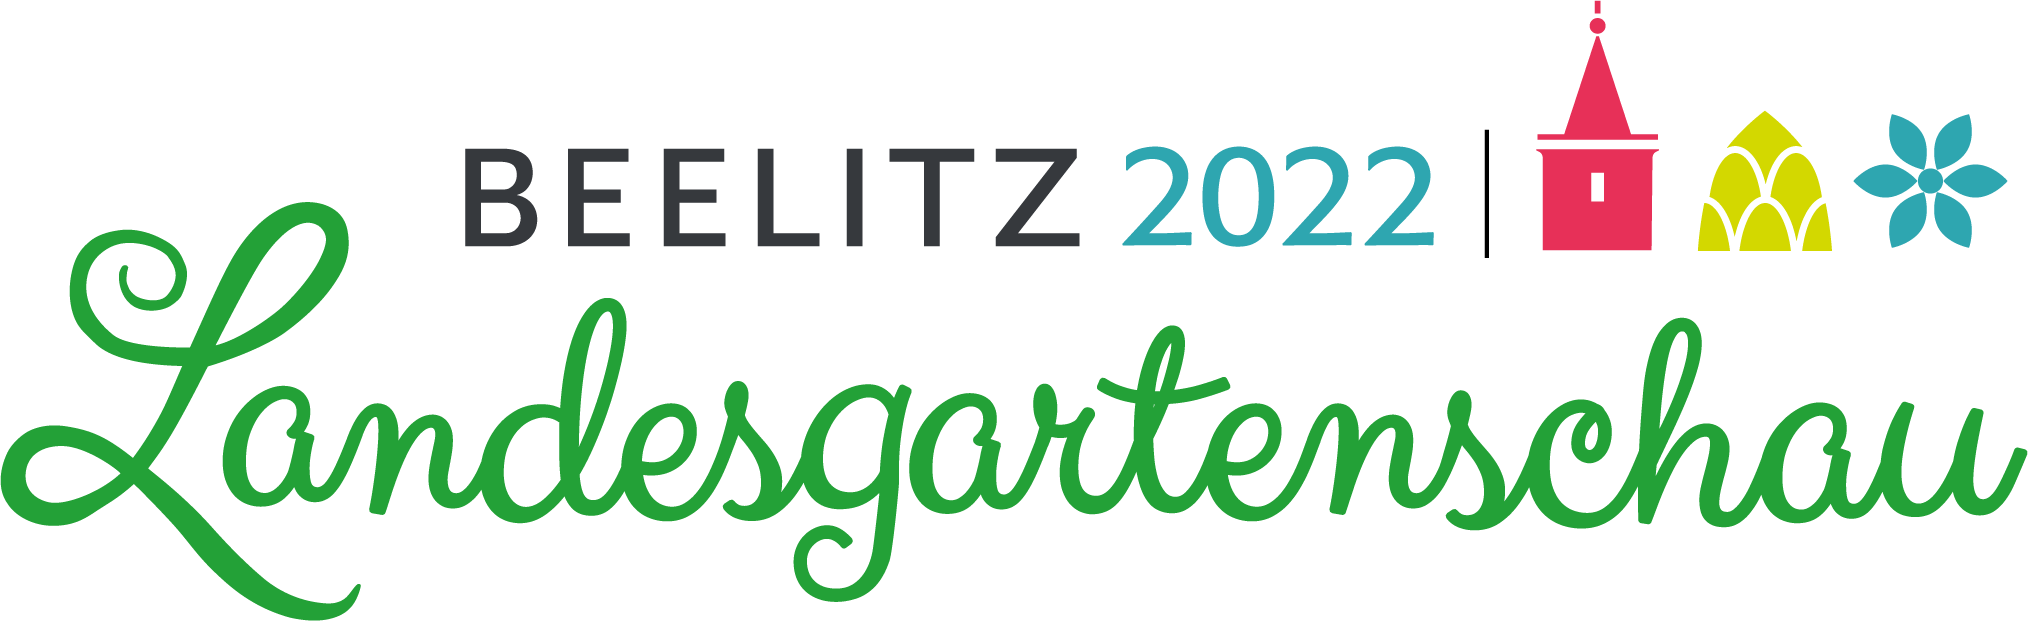 Partner und Sponsoren_Laga Beelitz Logo_©Landesgartenschau Beelitz 2022